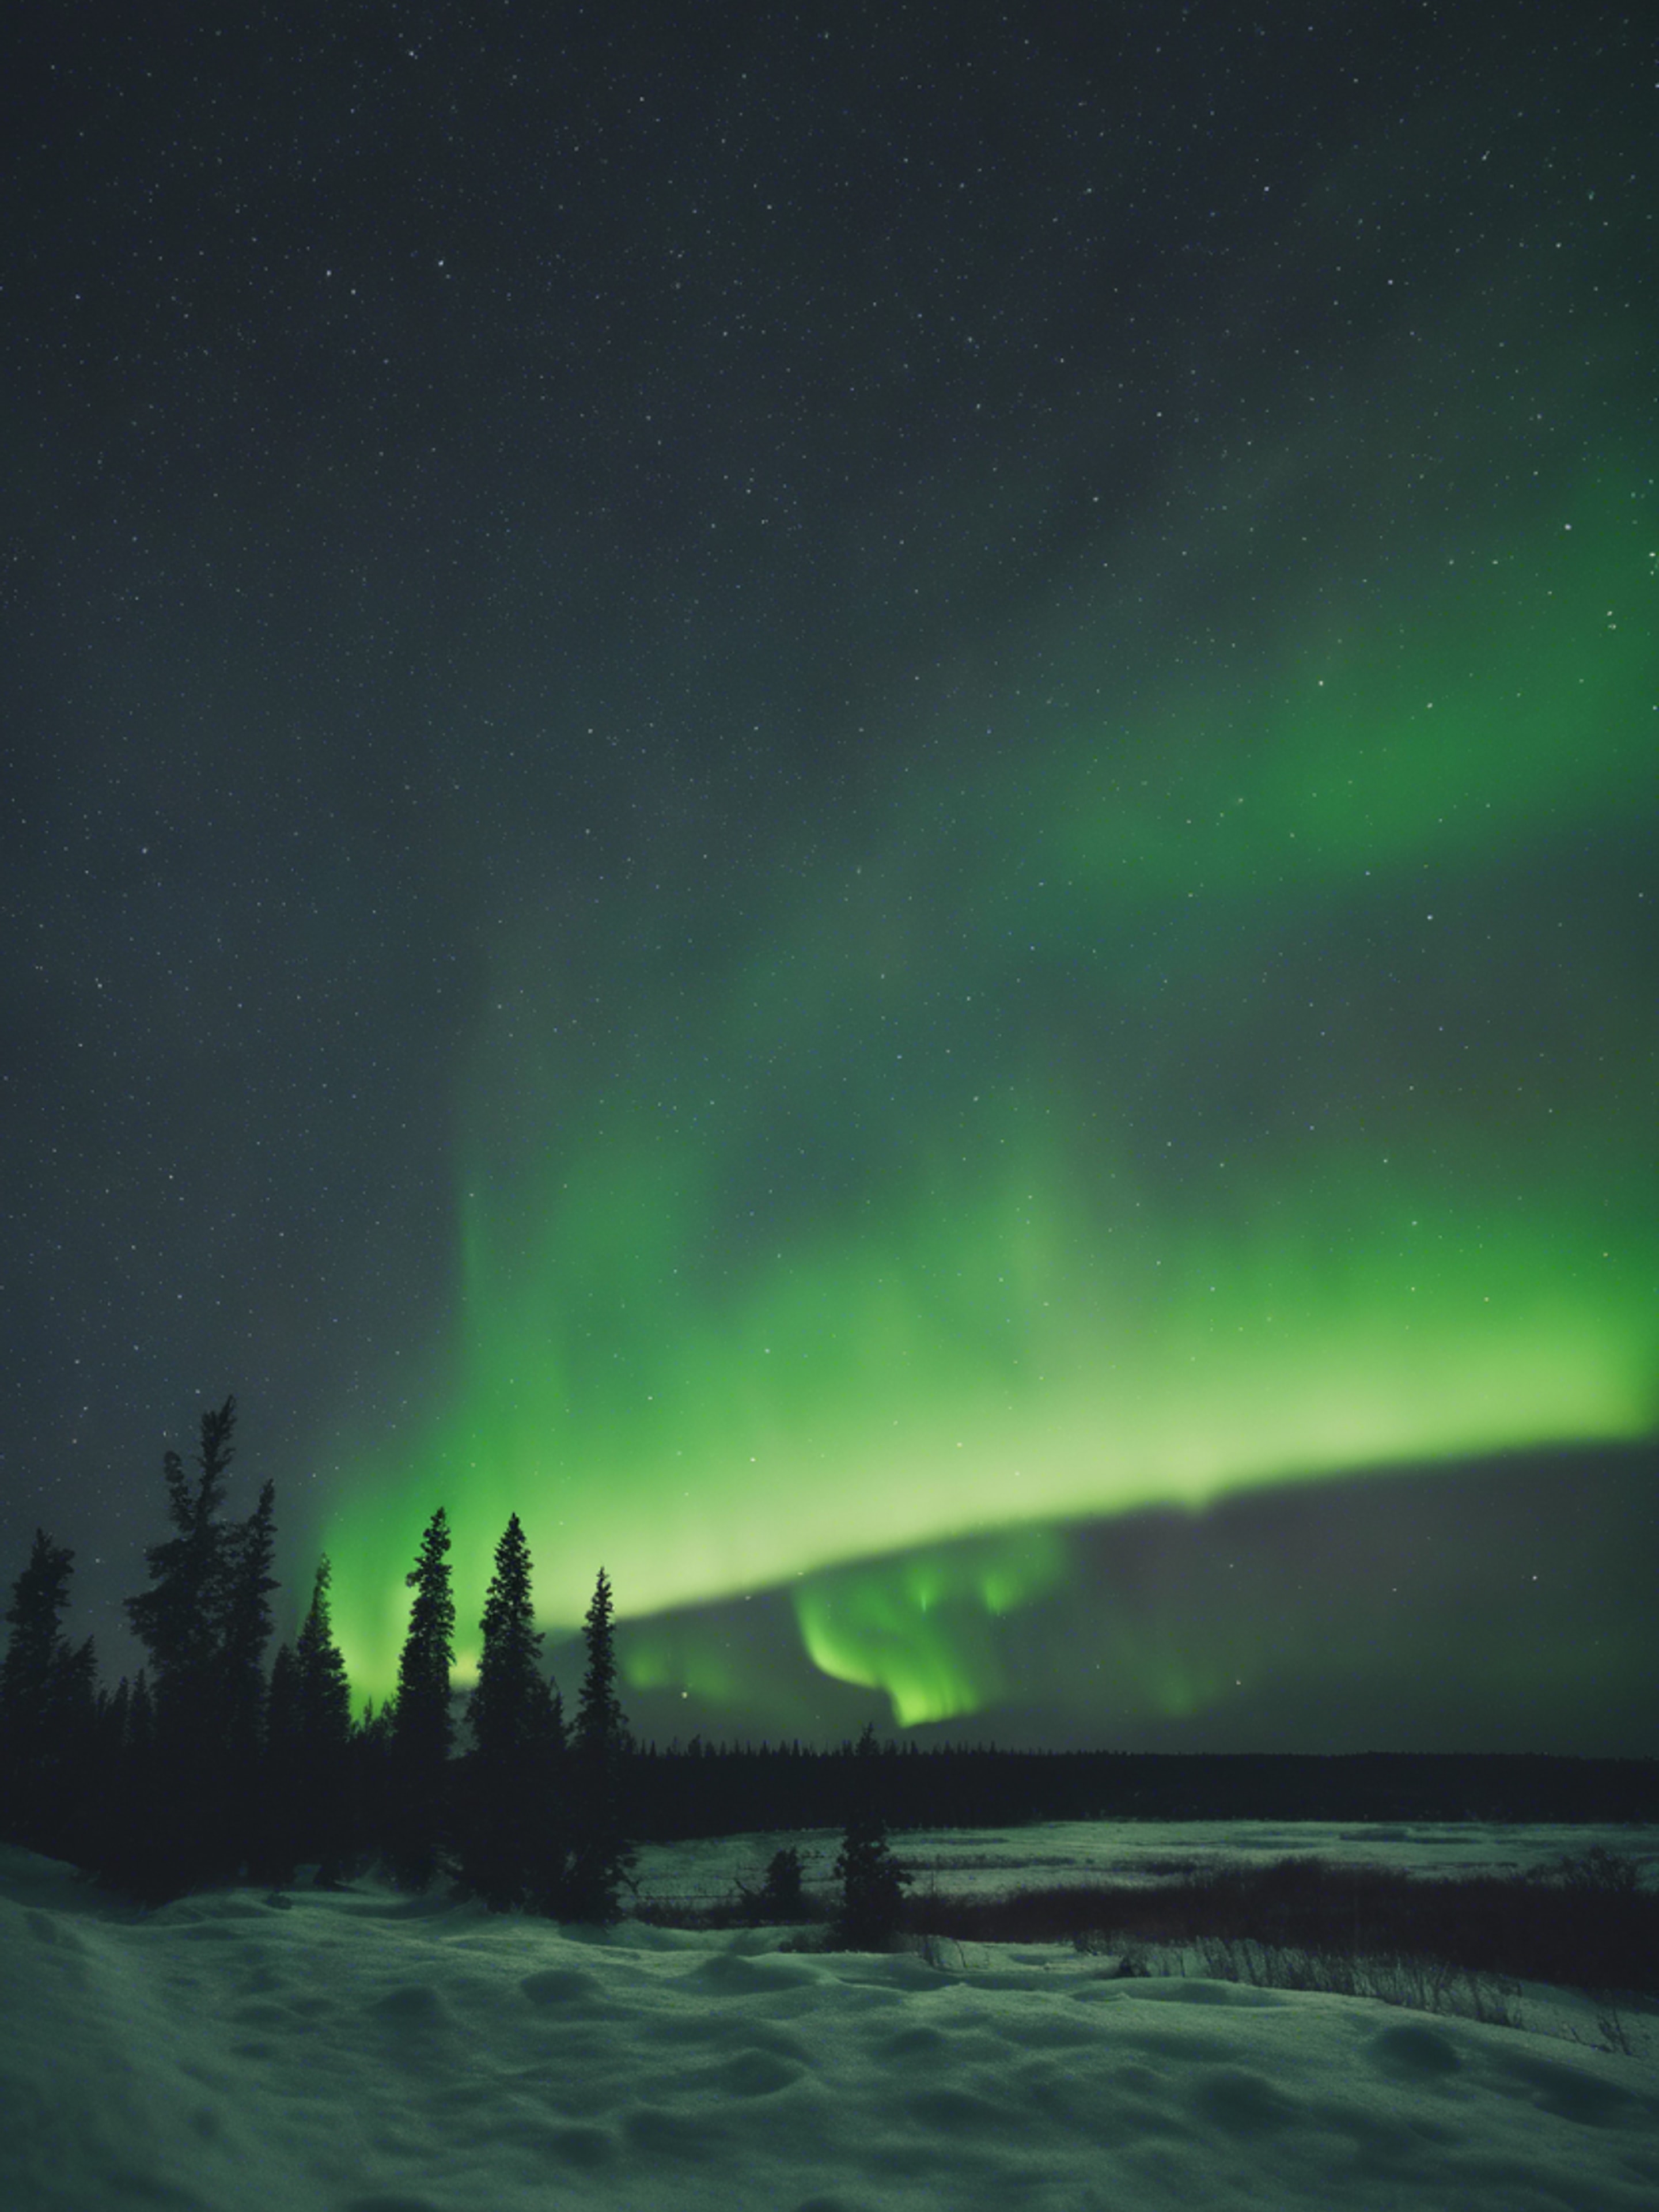 A swath of dark green northern lights dancing in the night sky. Tapéta[3dc0172f99594e7eaaa9]